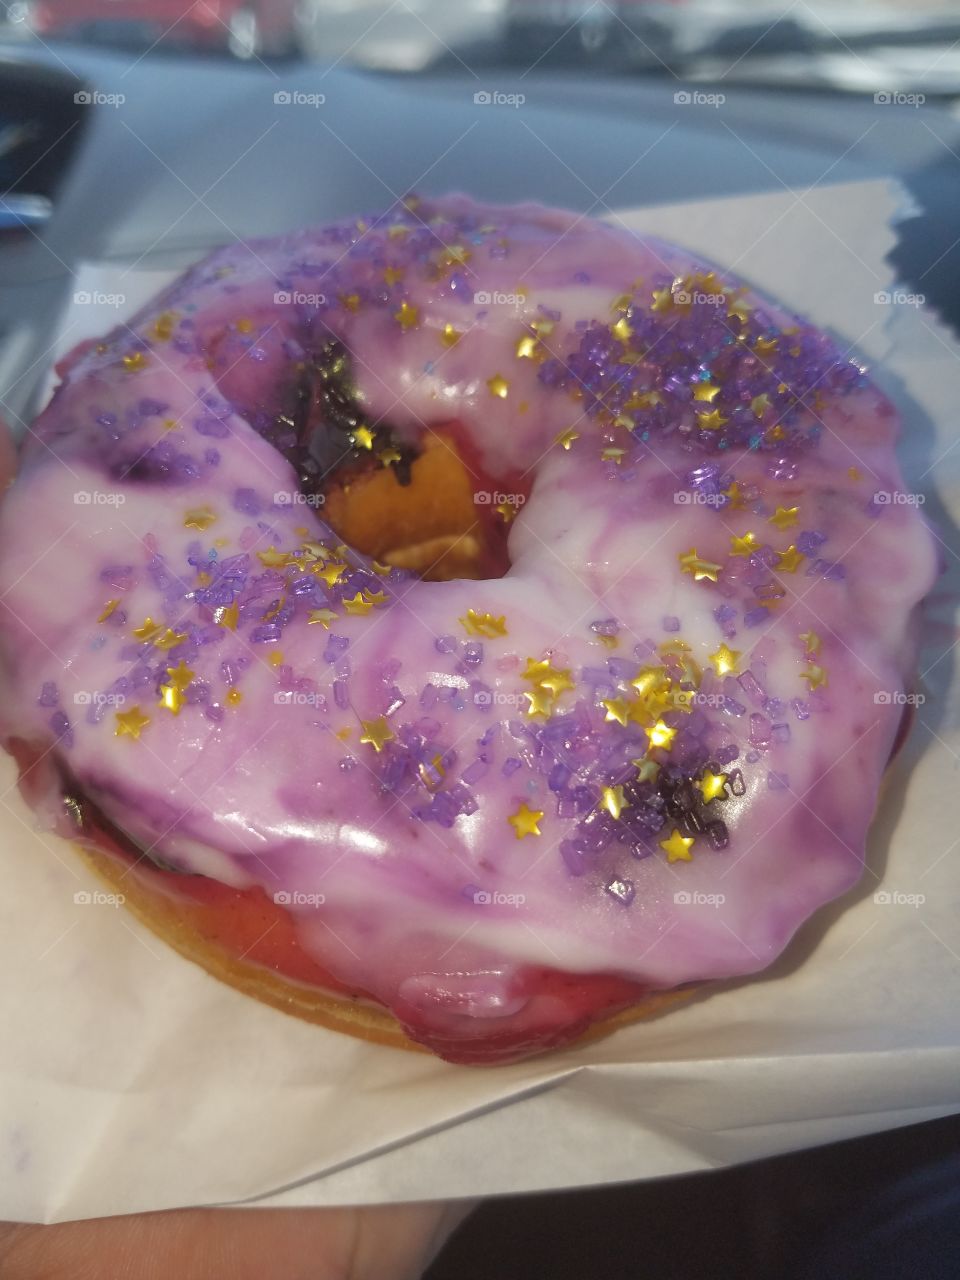 Dill's blackberry galaxy donut